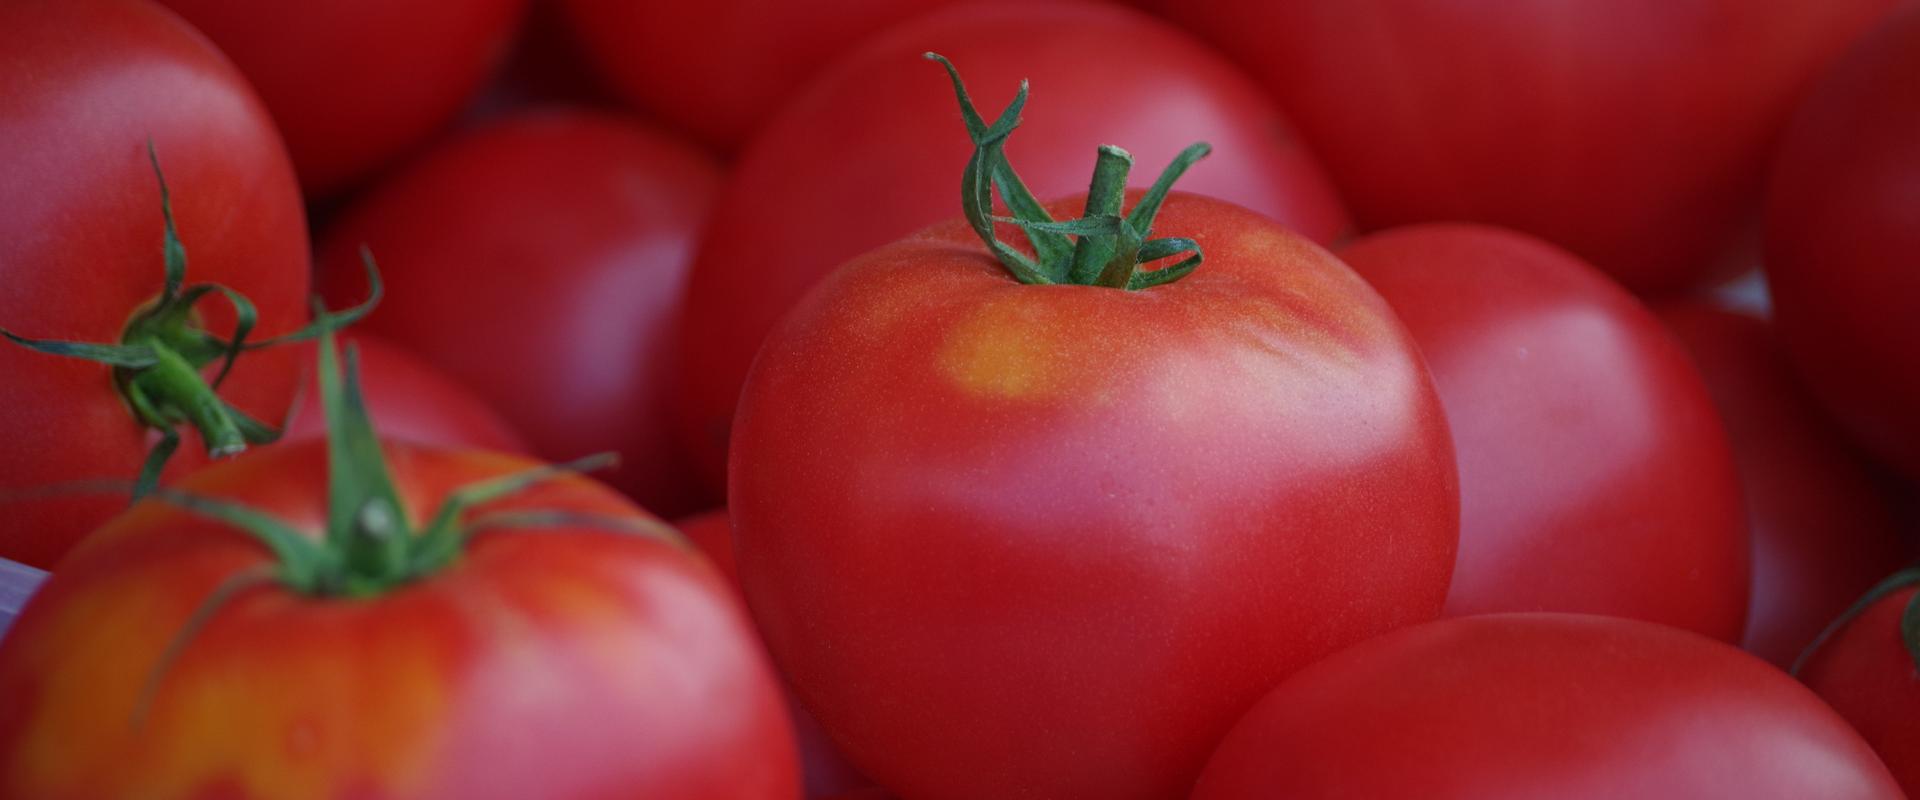 Freiluftmarkt in Tartu: reife Tomaten